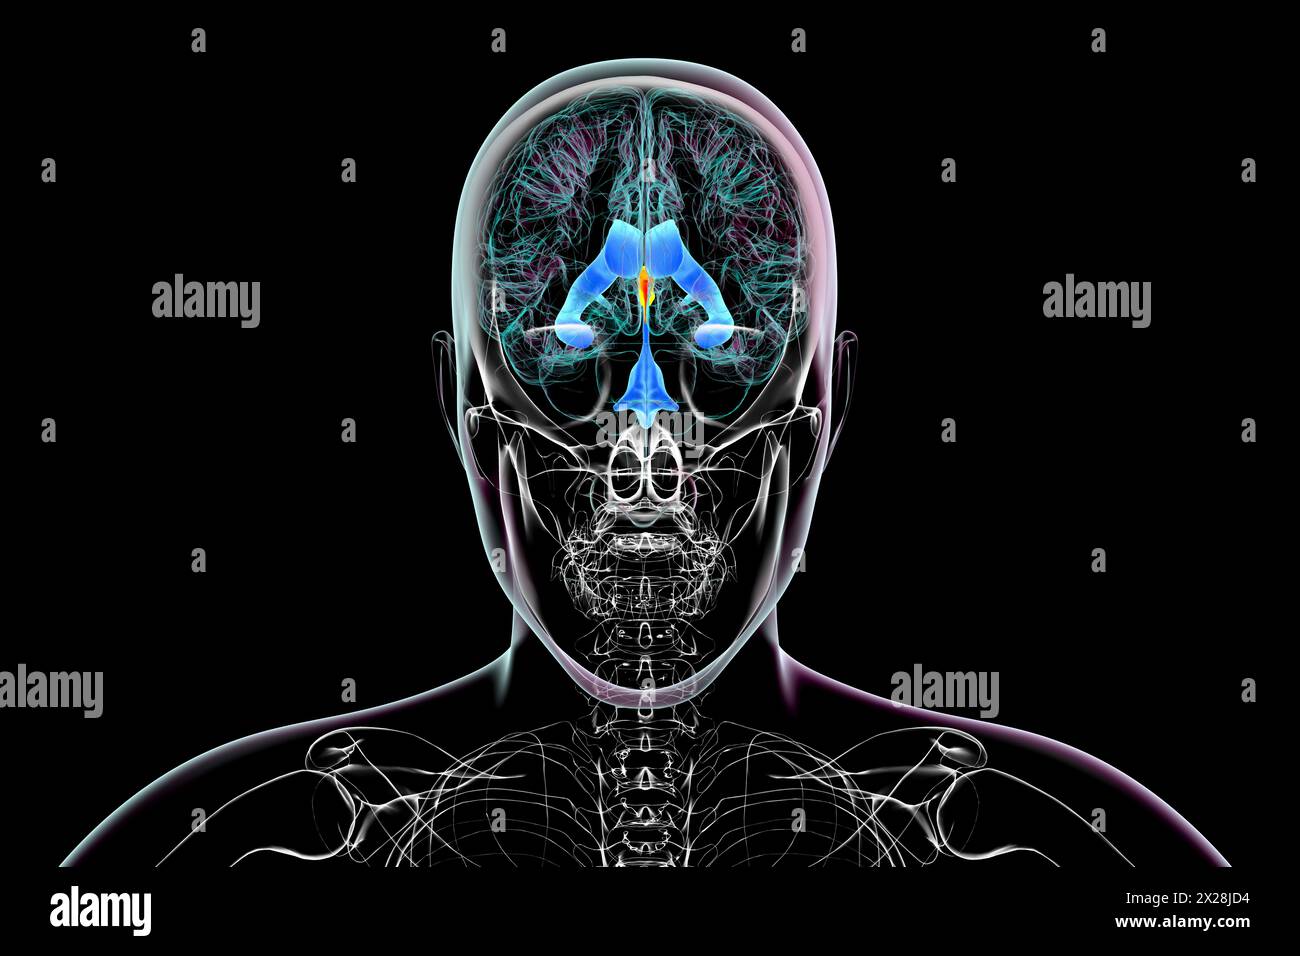 Third brain ventricle, illustration Stock Photo